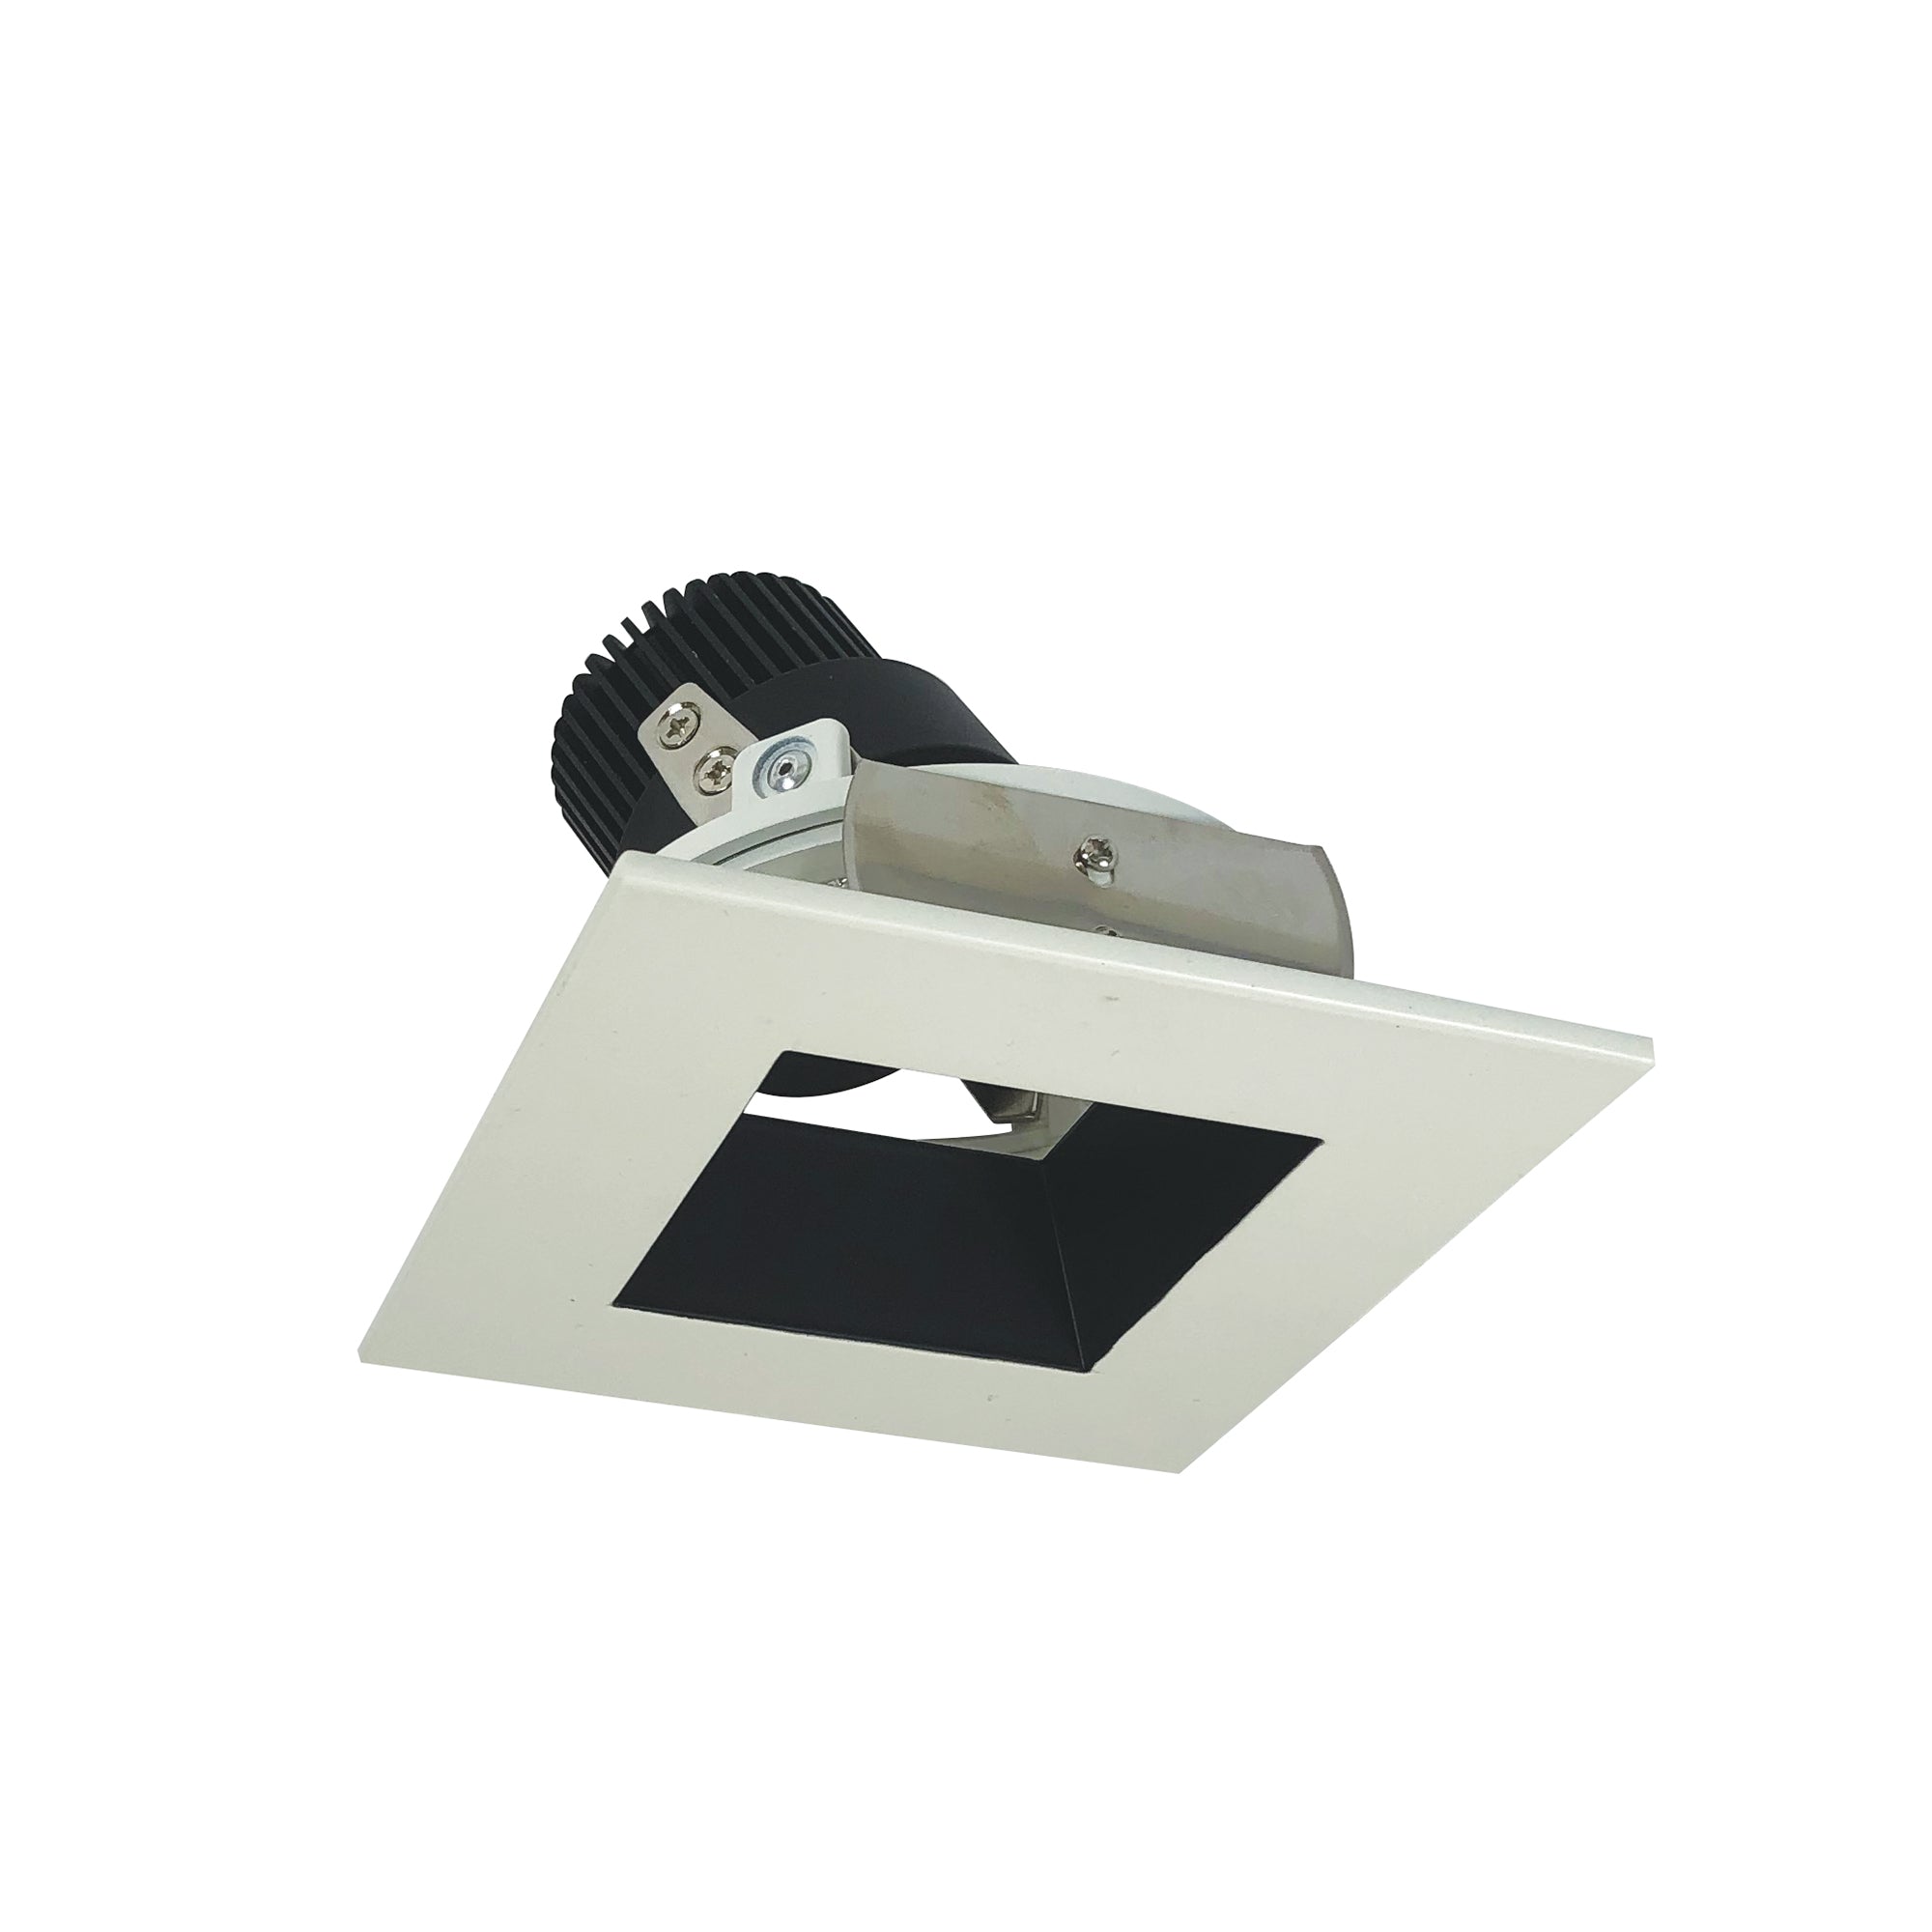 Nora Lighting NIO-4SDSQ35QBW 4" Iolite LED Square Adjustable Reflector With Square Aperture, 10-Degree Optic, 800lm / 12W, 3500K - Black Reflector / White Flange